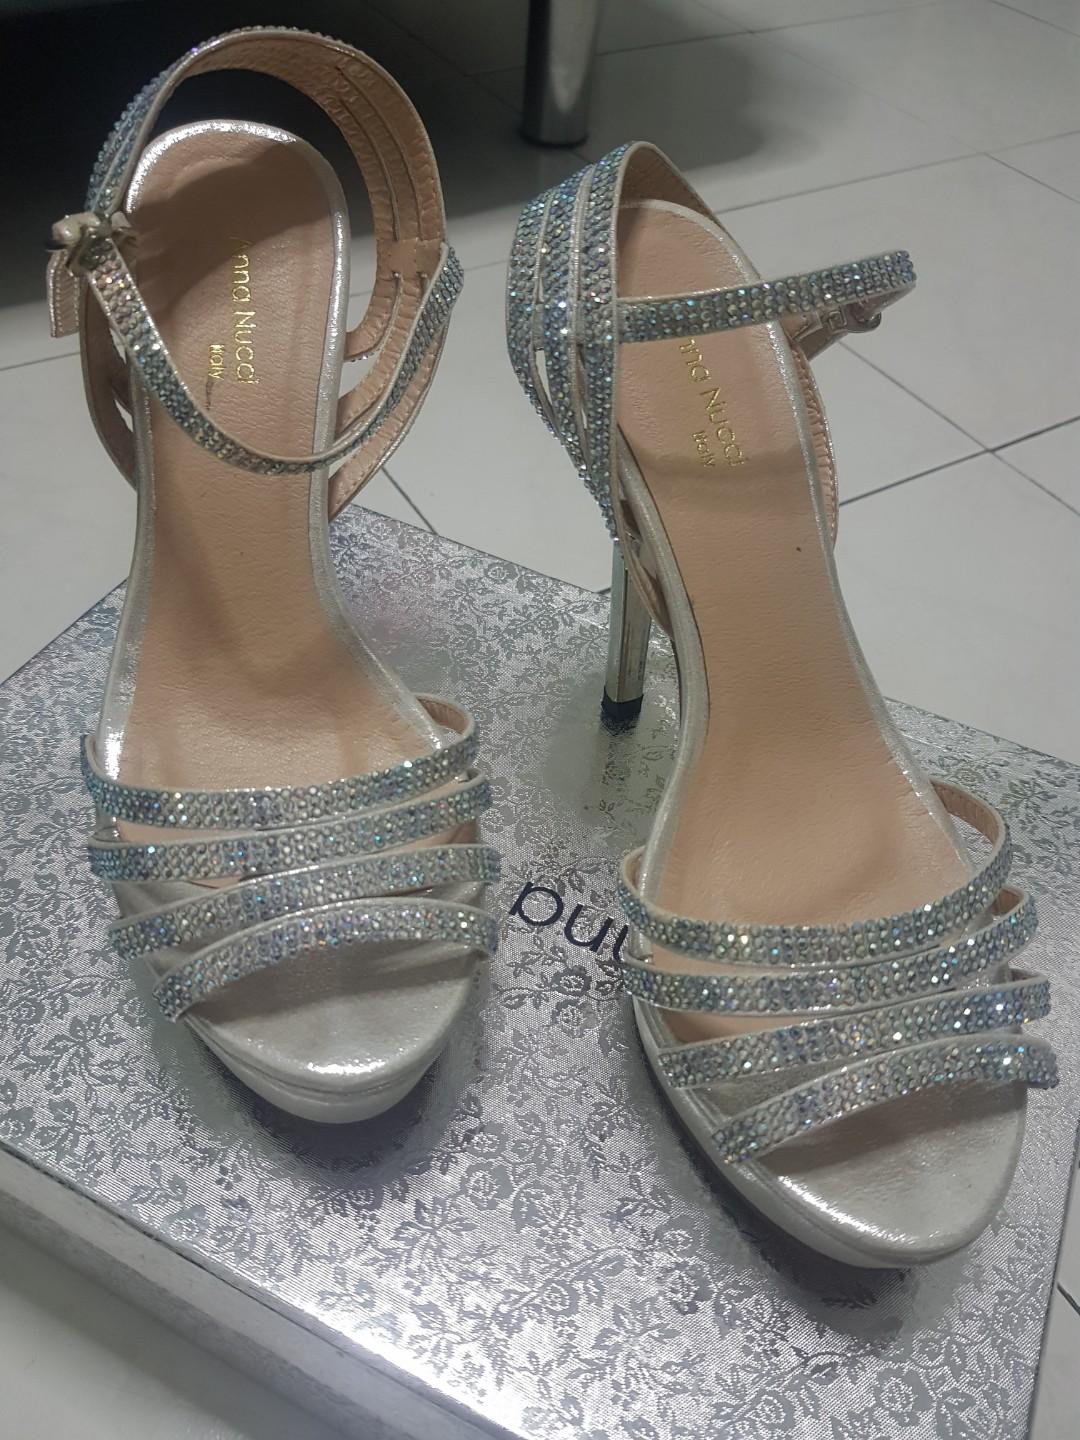 white diamond high heels